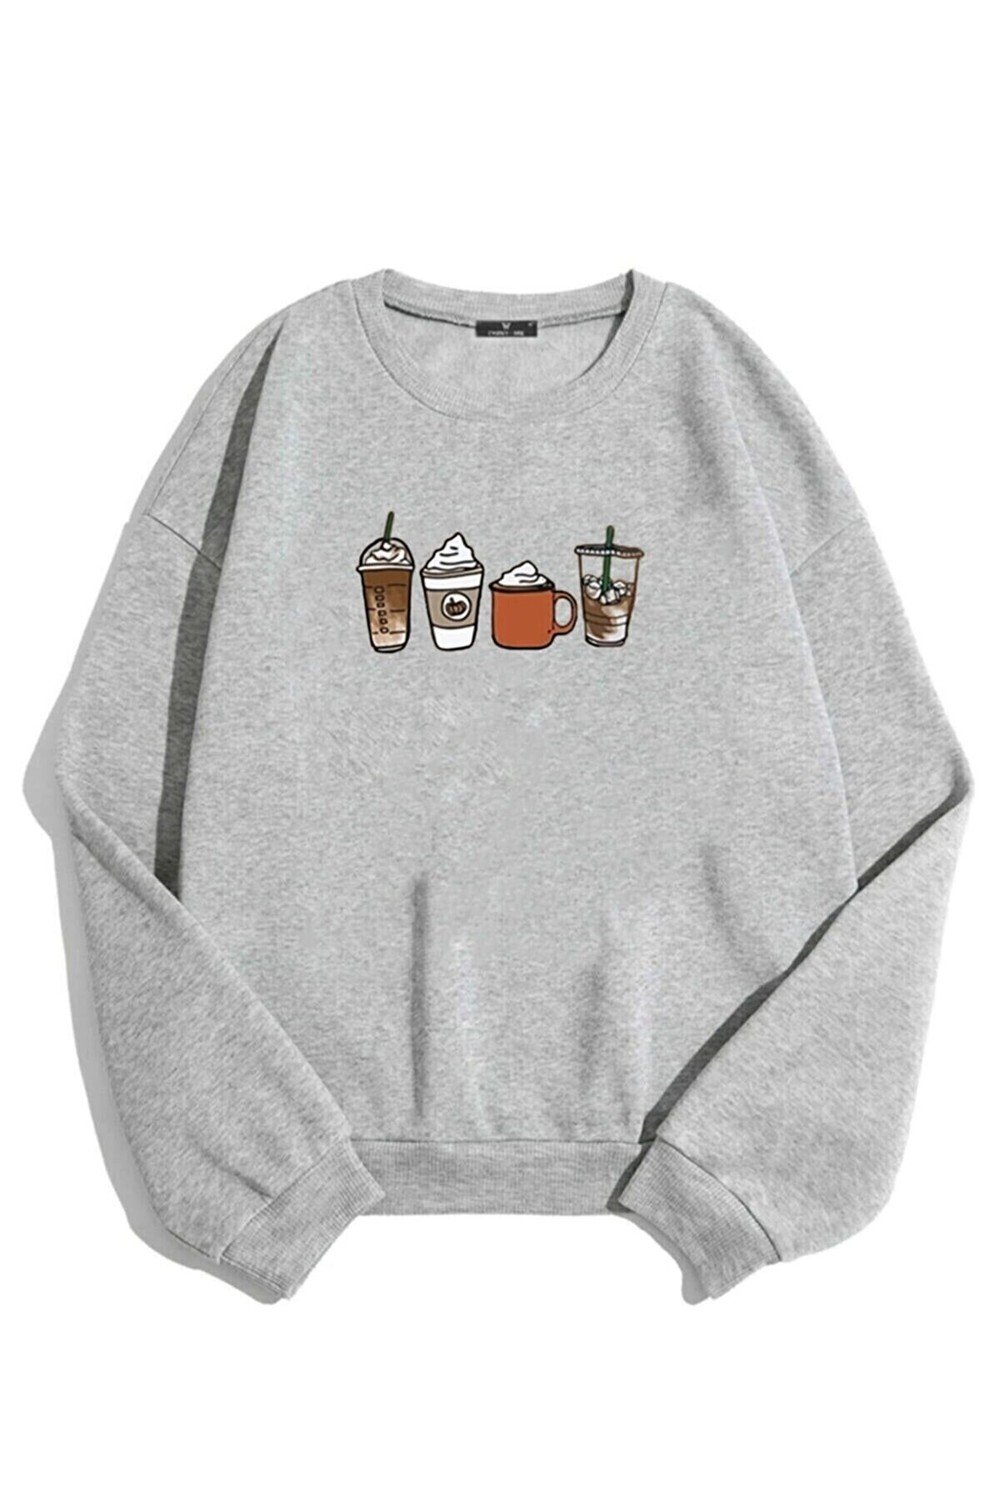 K&H TWENTY-ONE Women's Gray Oversize Coffee Printed Sweatshirt